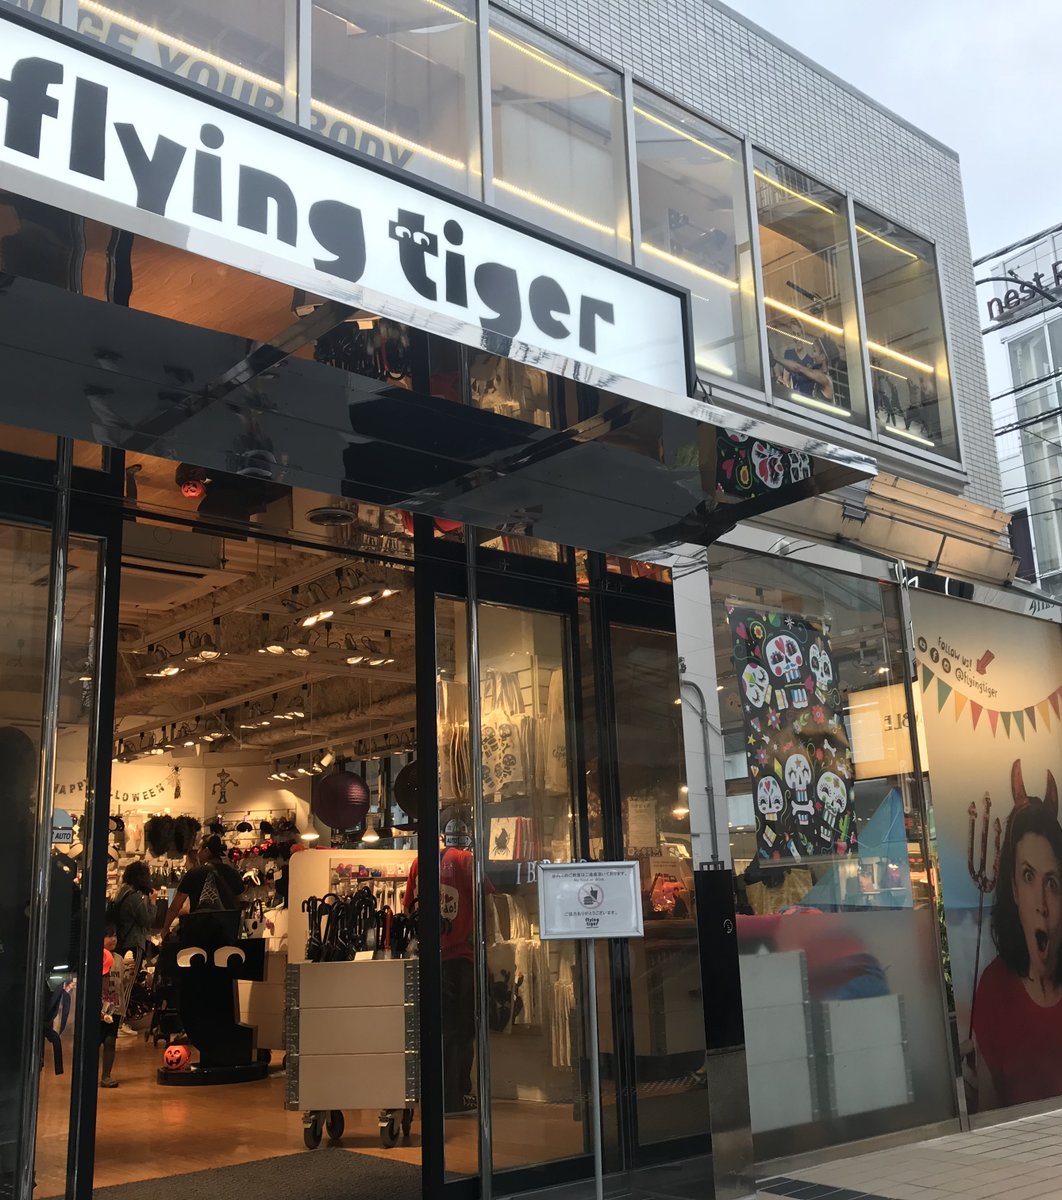 Flying Tiger Copenhagen (フライング タイガー コペンハーゲン) 表参道ストア